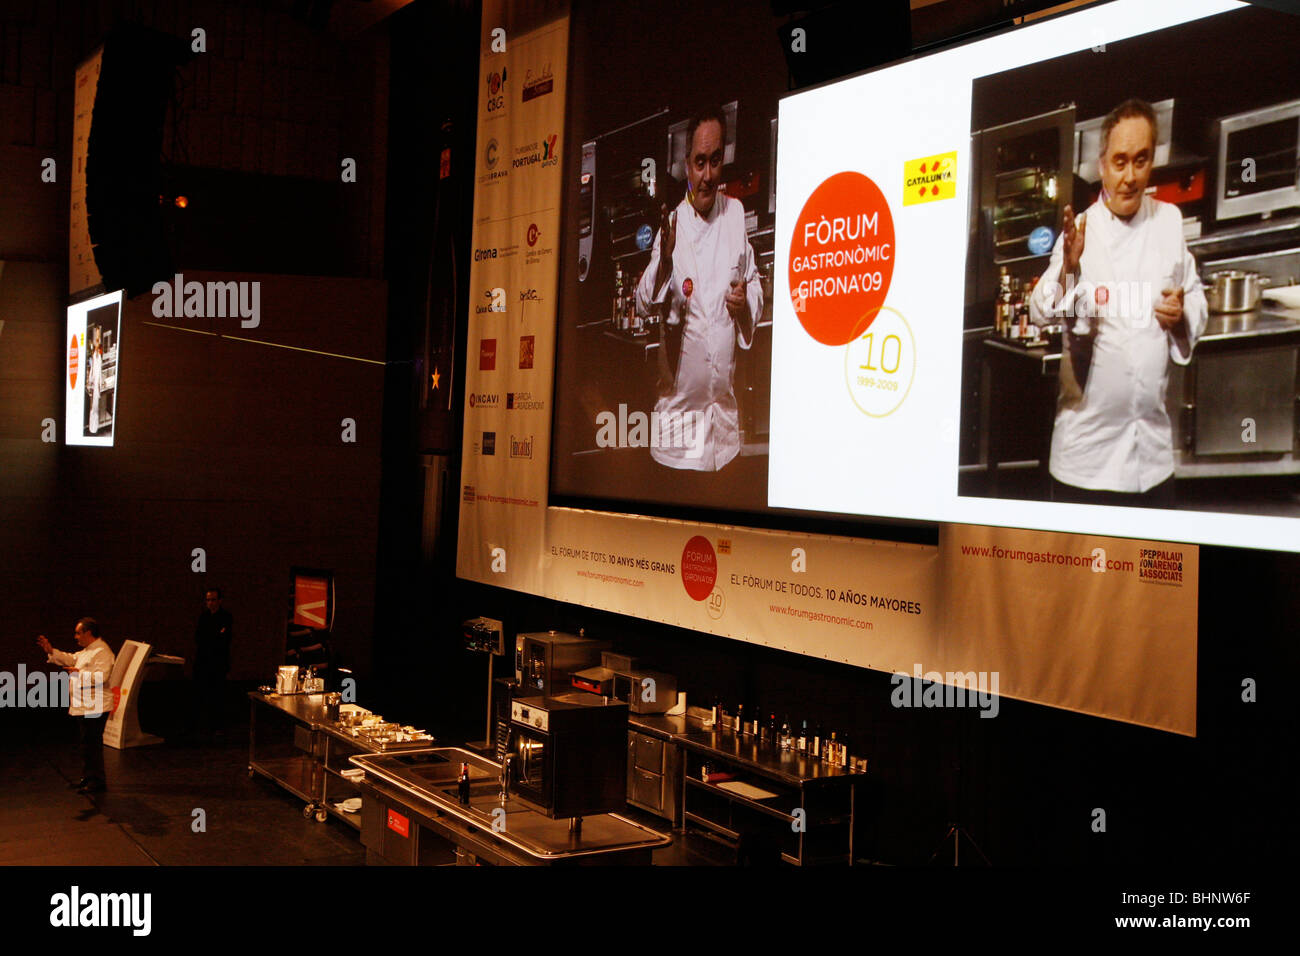 Celebrity chef Ferran Adria from restaurant El Bulli at a Gastronomic Forum in Girona, Catalonia, Spain Stock Photo